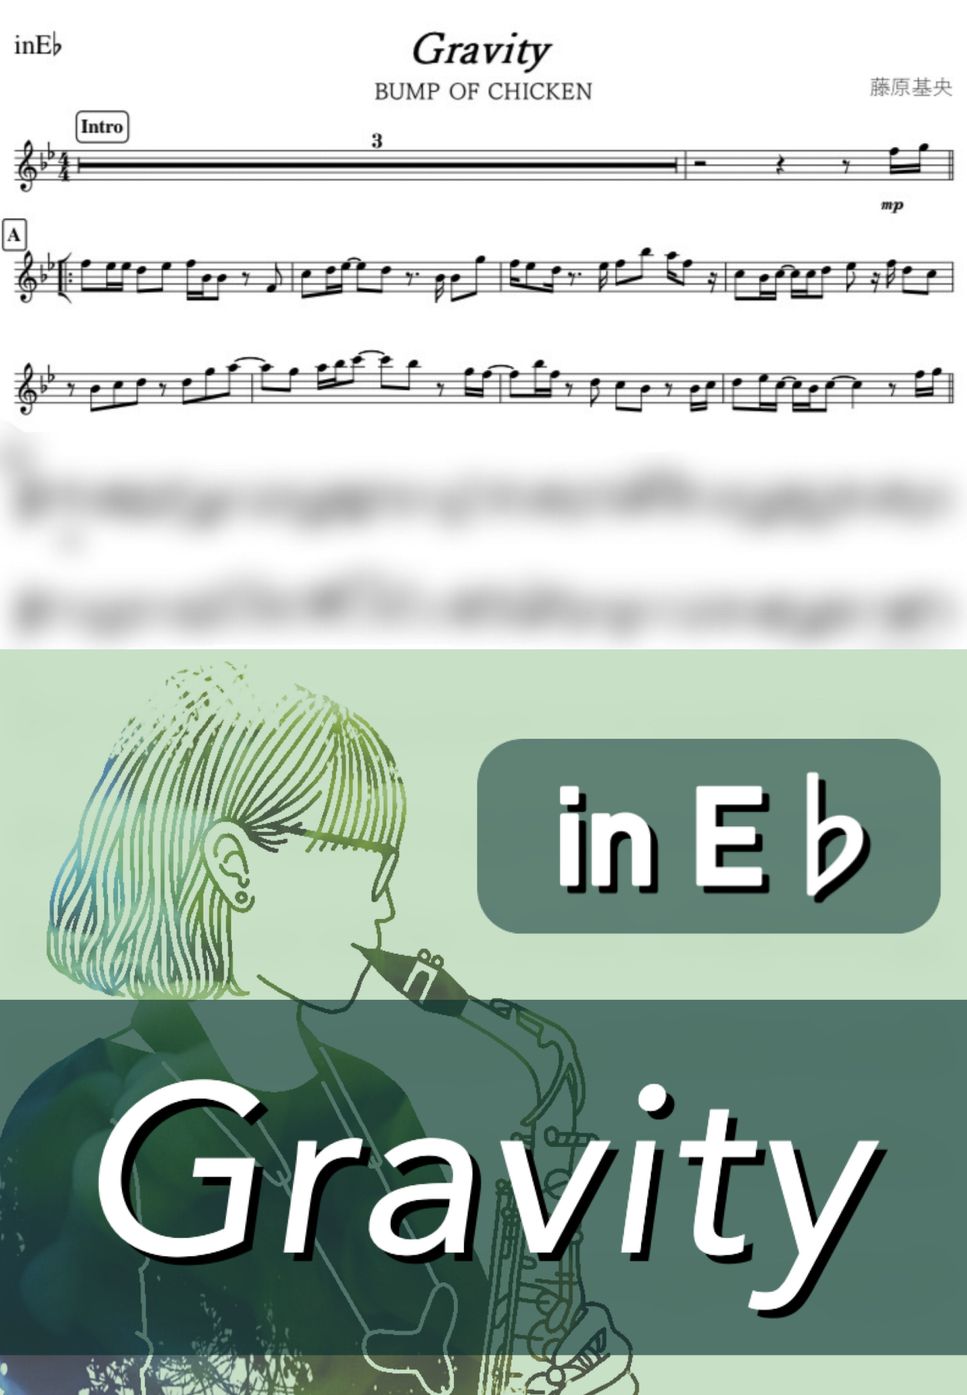 BUMP OF CHICKEN - Gravity (E♭) by kanamusic